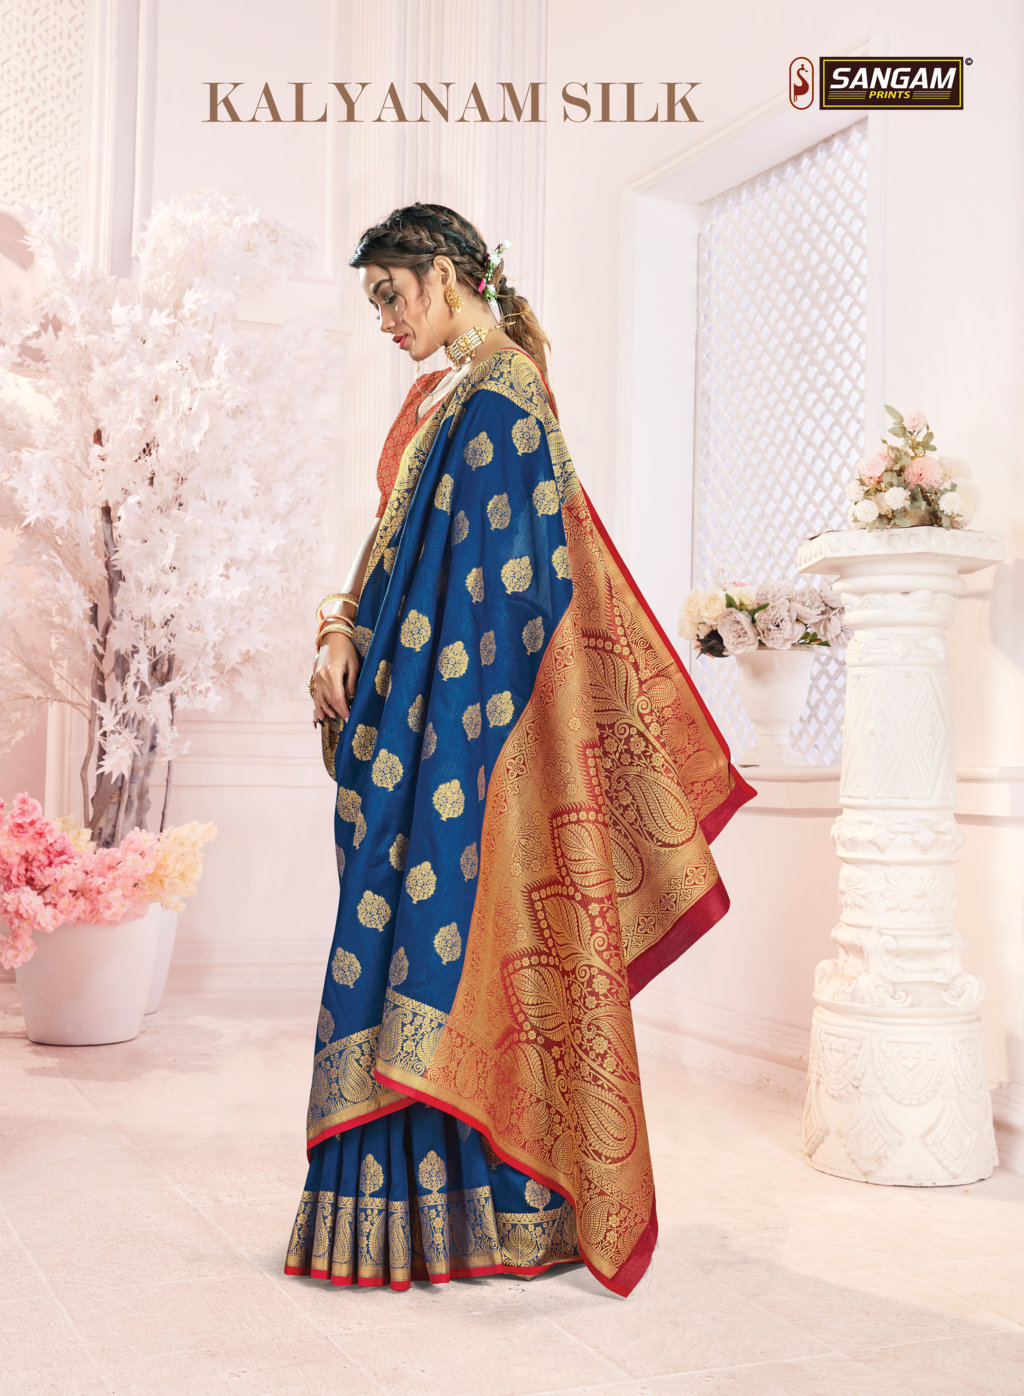 Sangam Prints Kalyanam Silk Handloom Silk With Jari Weaving ...